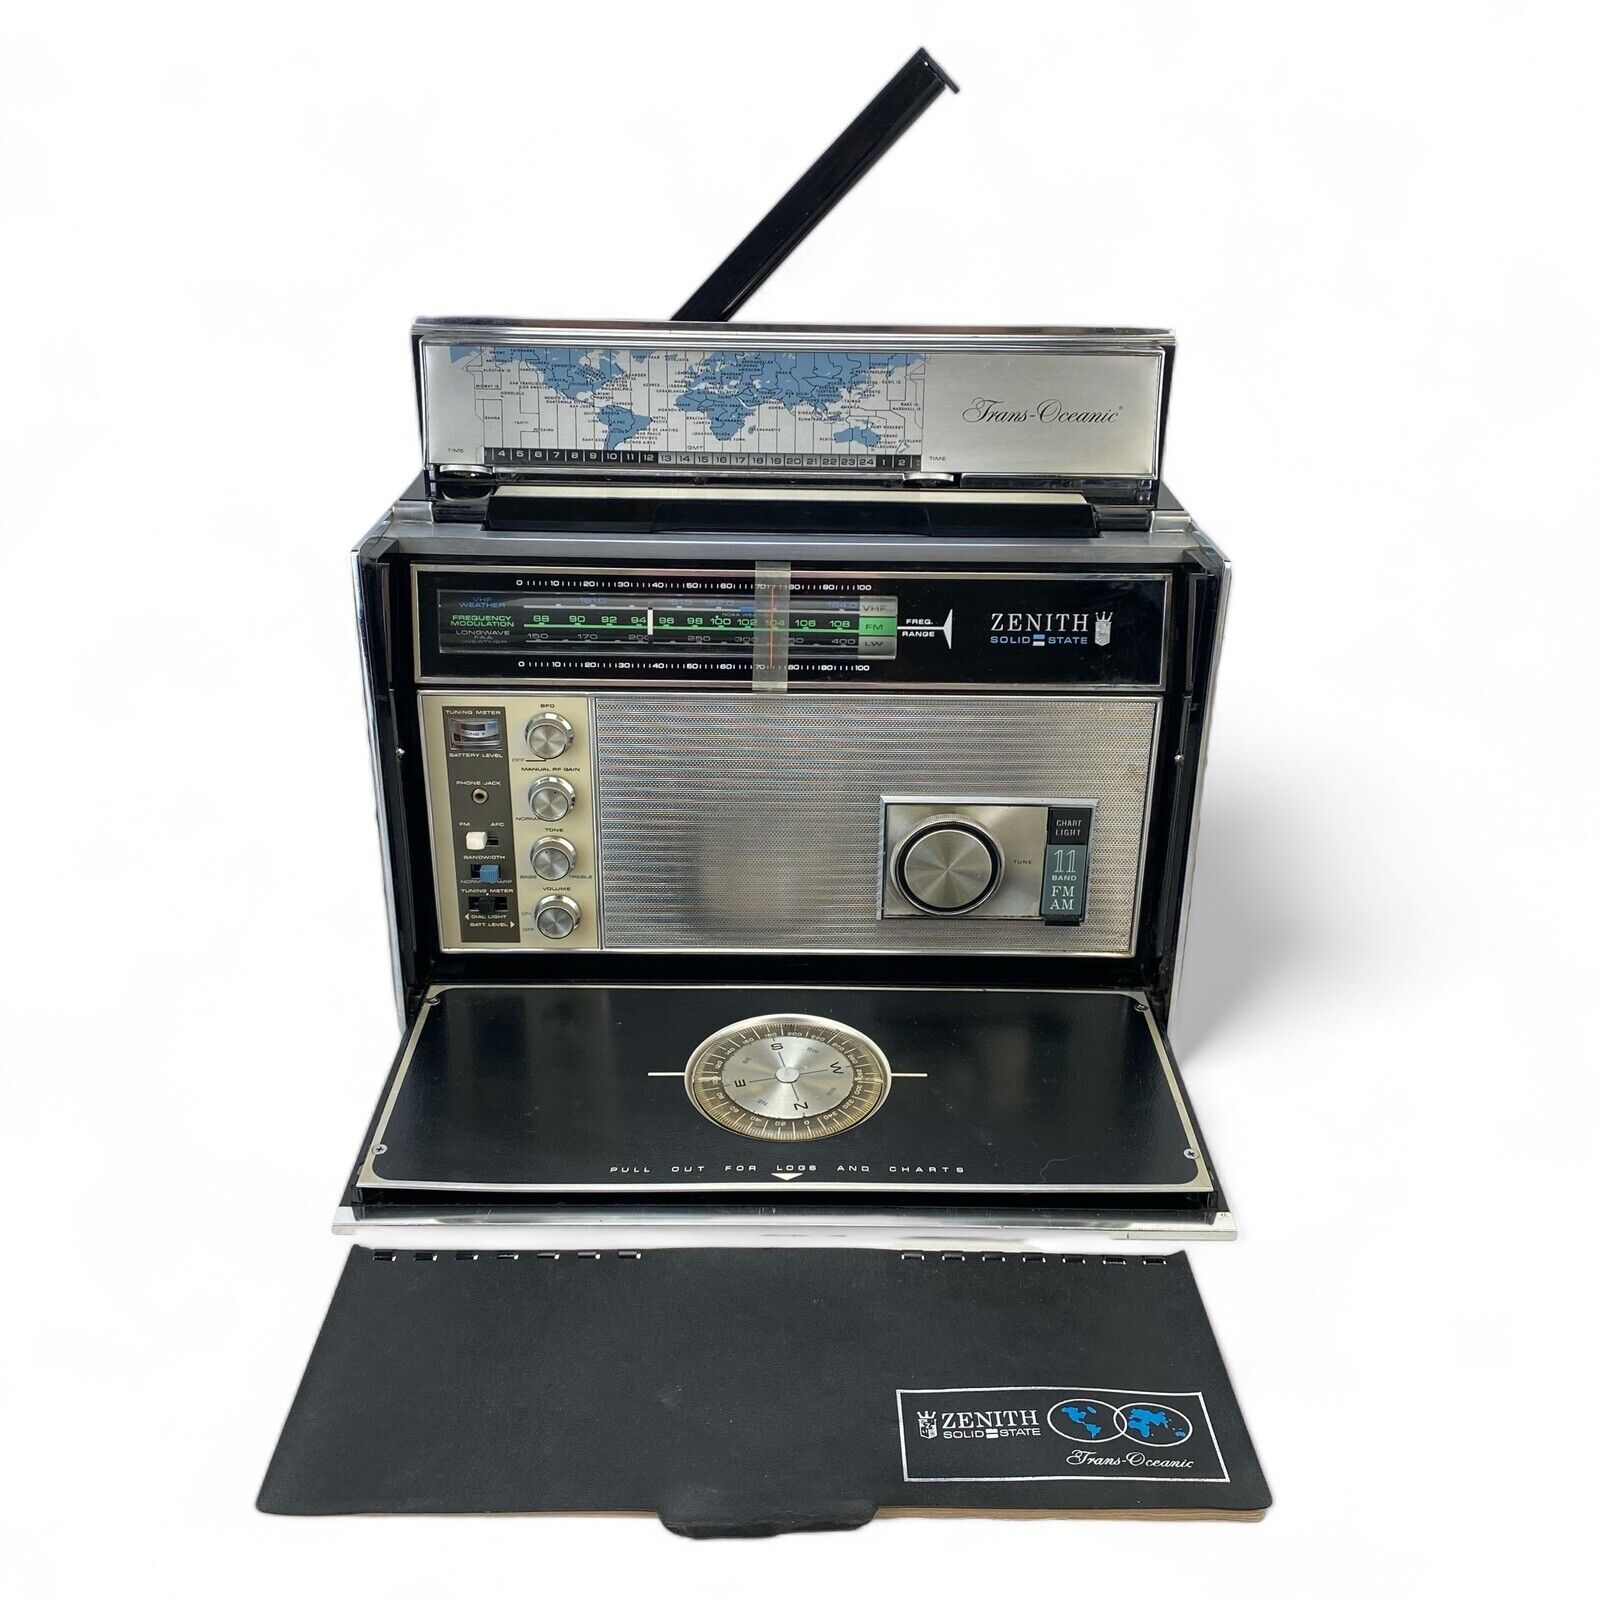 VTG 1971 Zenith Trans Oceanic RD7000Y 11 Band Transistor Radio w/Logbook TESTED